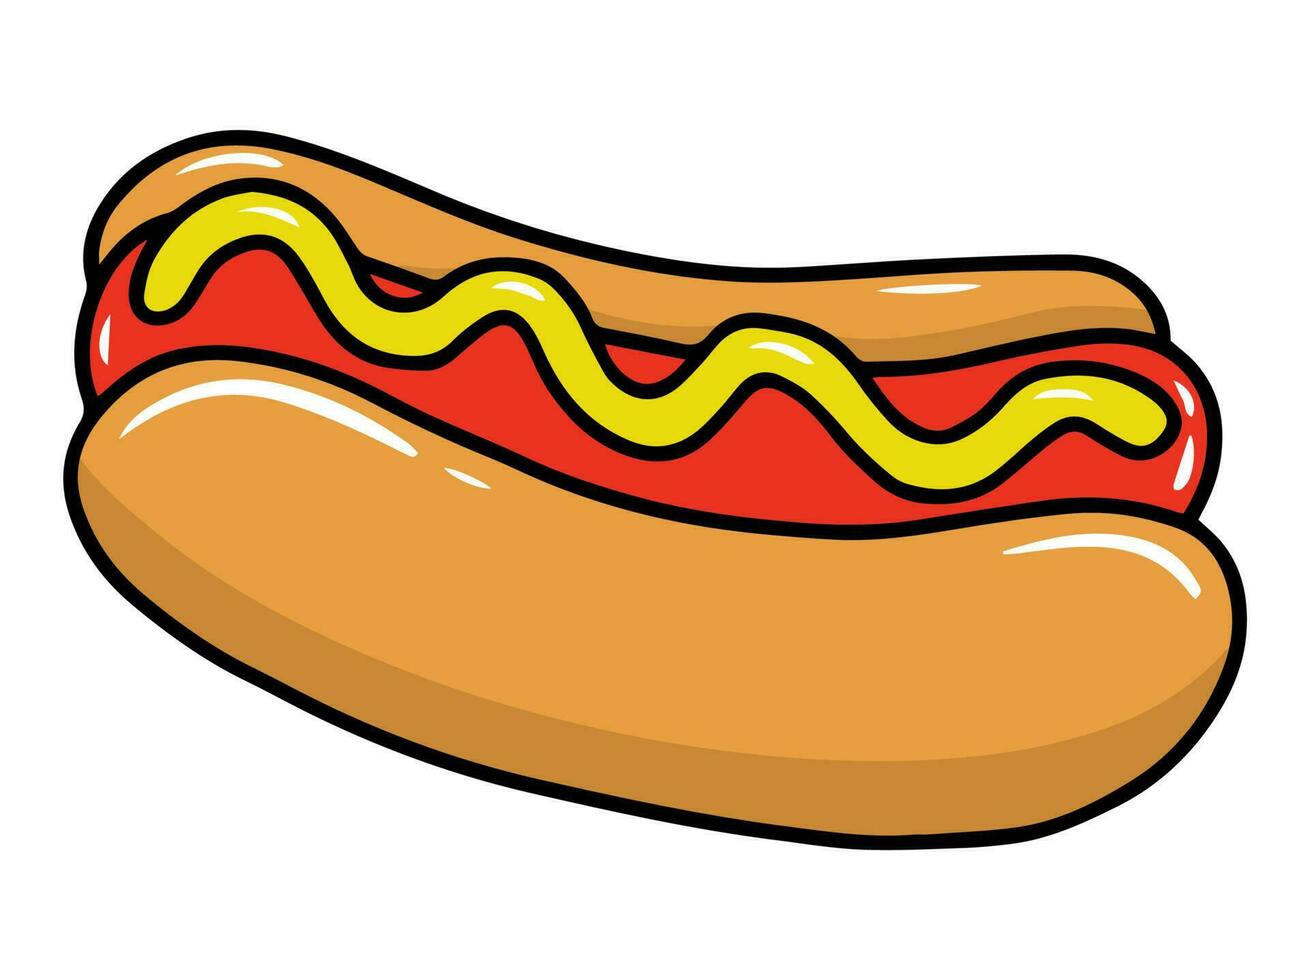 Hot Dog fast food clipart Illustration vector